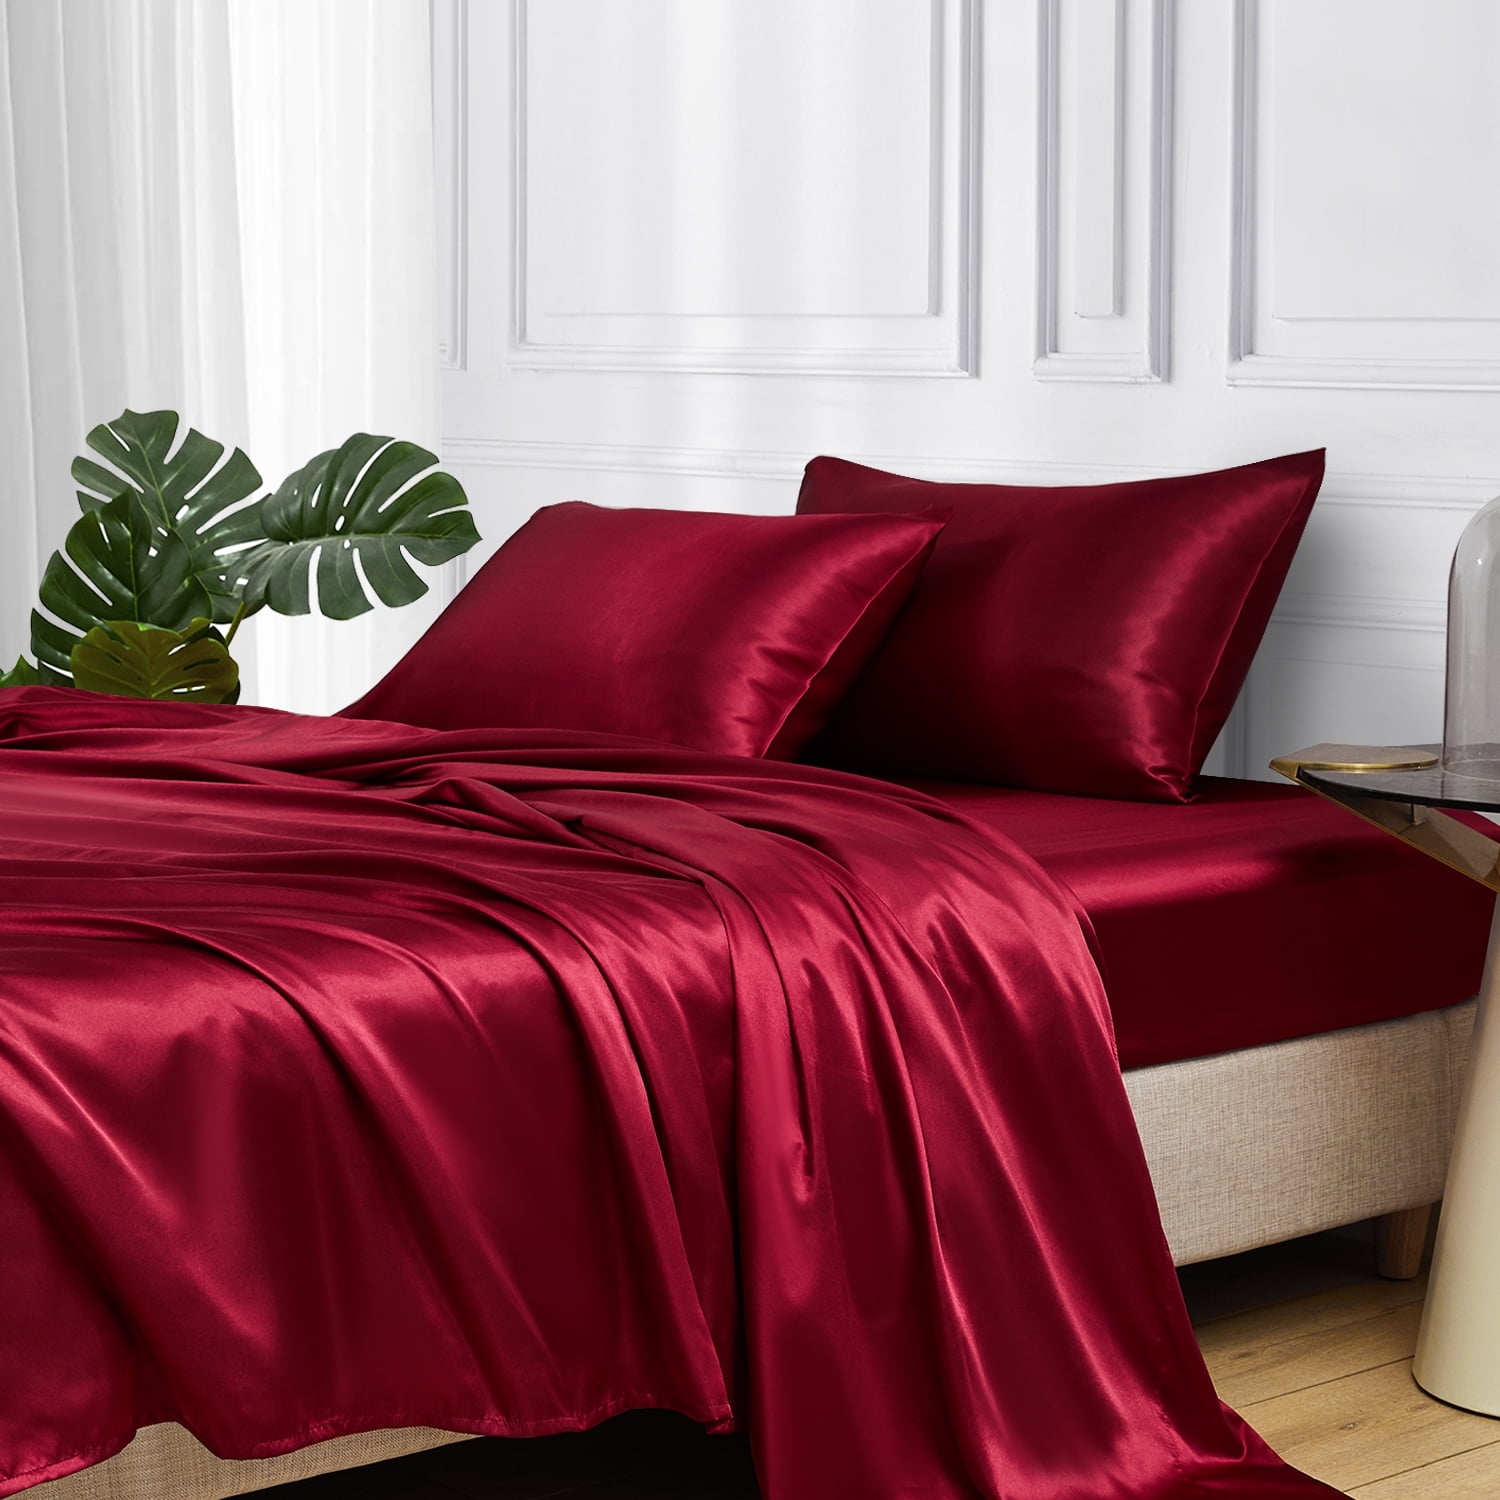 Details about   wavveUziz Satin Sheets King Size Red Satin Bed Sheet Set 16" Deep Pocket Silky S 